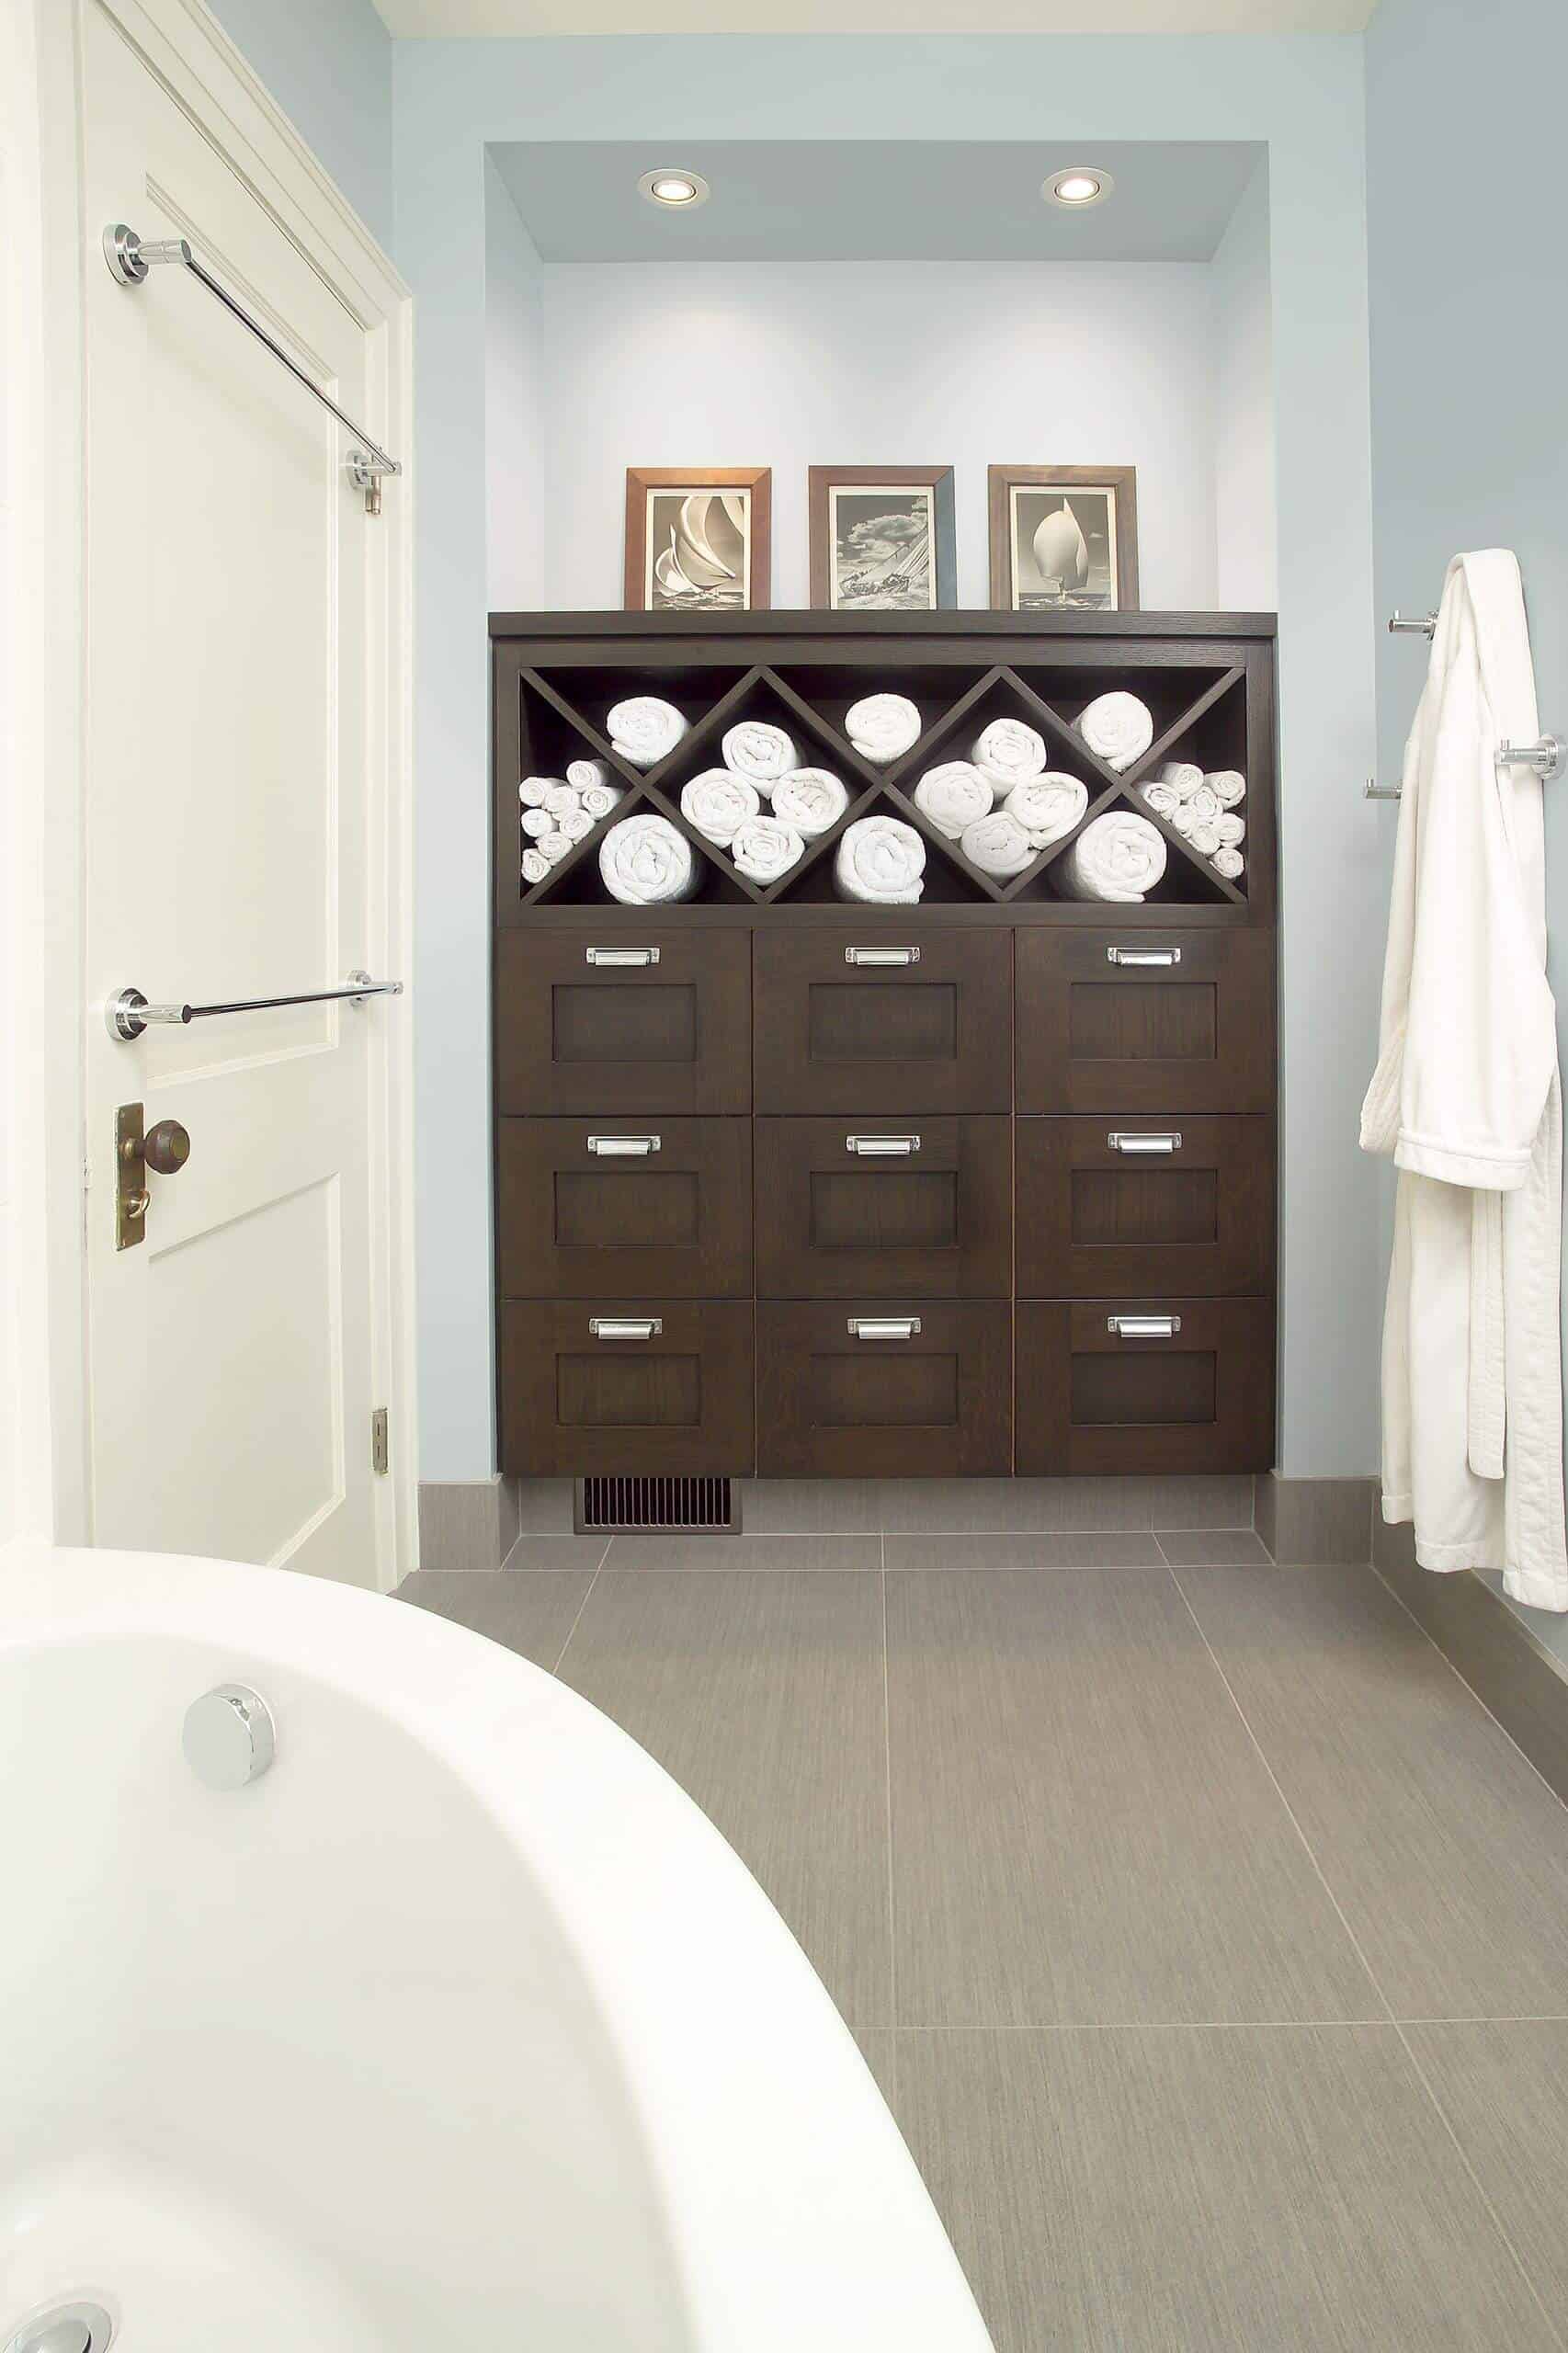 Towel Storage Ideas For Your Bathroom, Small Bathroom Towel Storage Cabinet